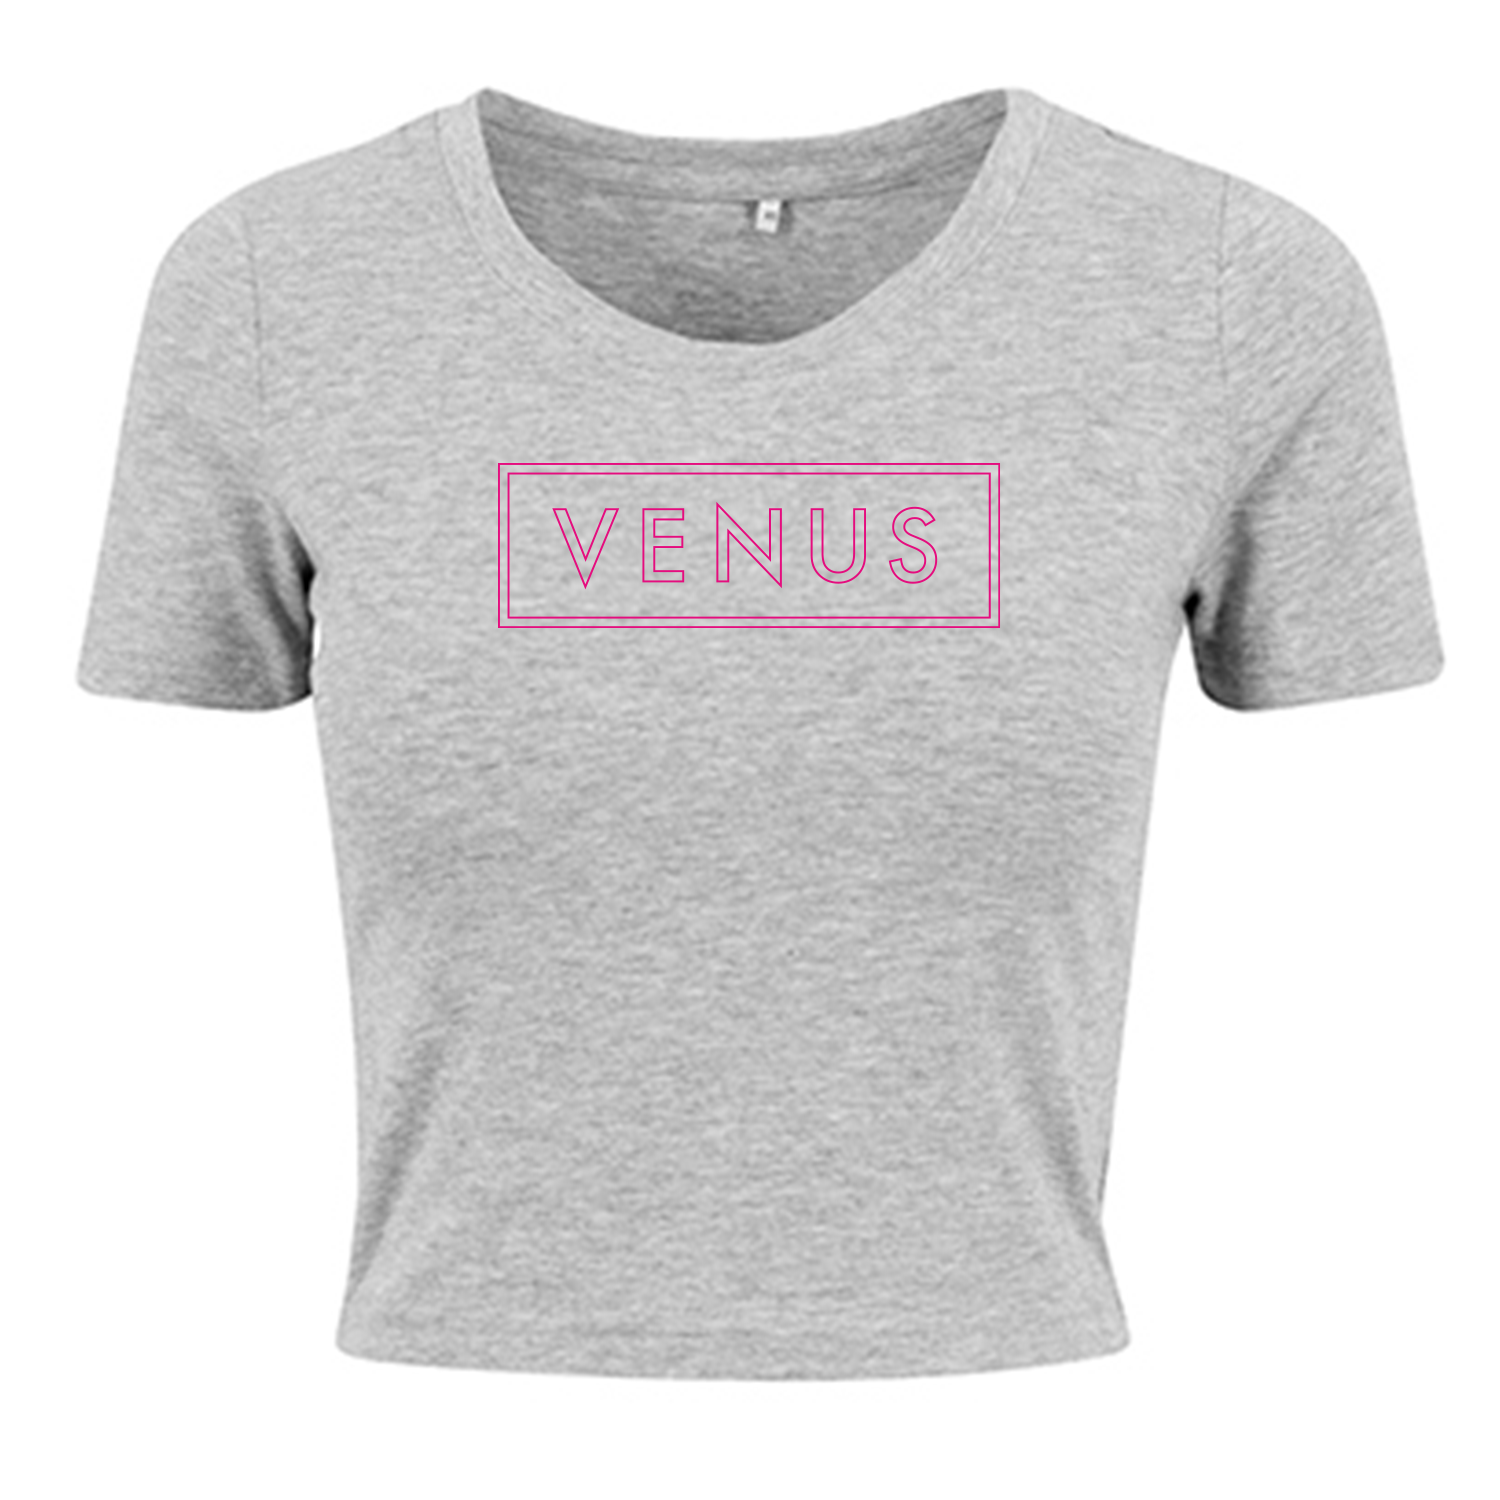 VENUS Girl's Cropped Top Logo - Heather Grey/Pink/Pink